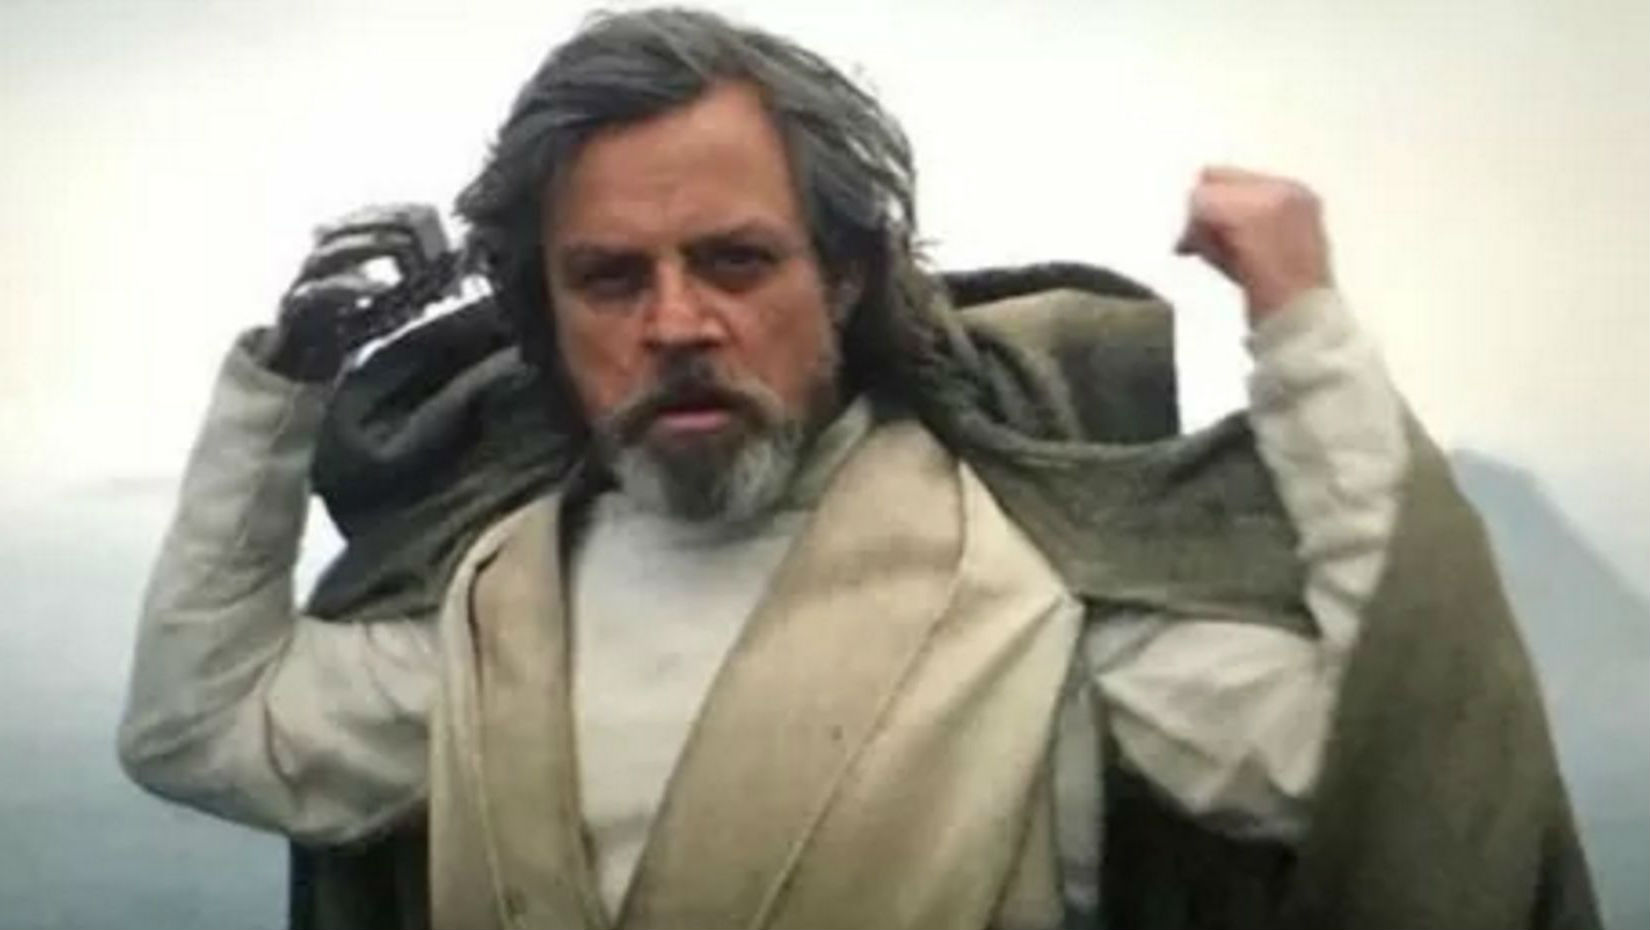 Luke skywalker star wars the force awakens 